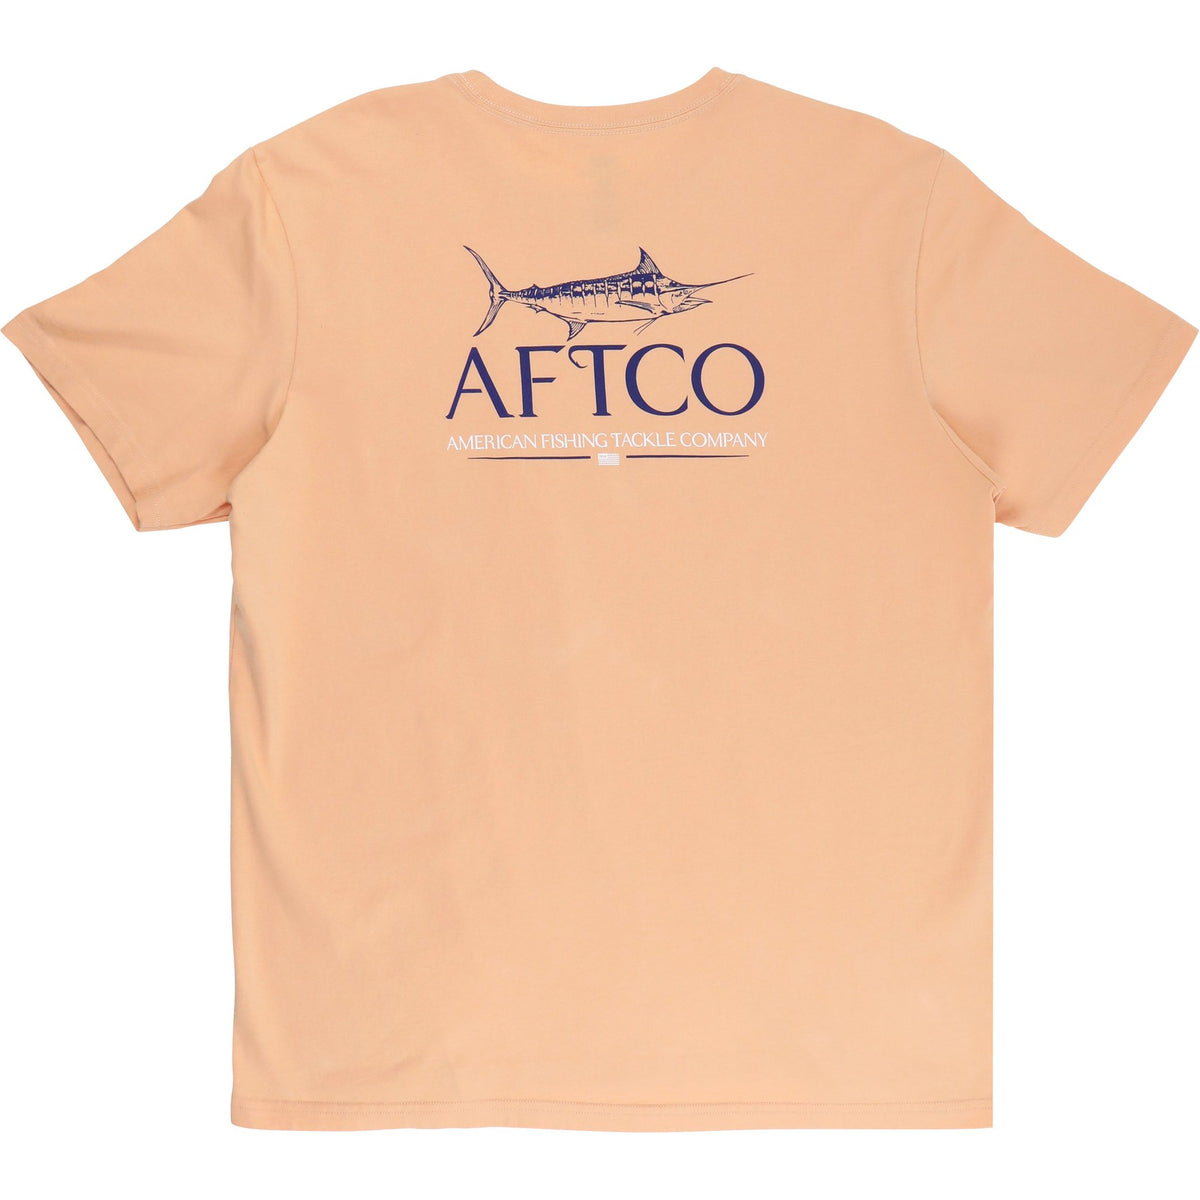 Jigfish Americana LS Performance Fishing Shirt